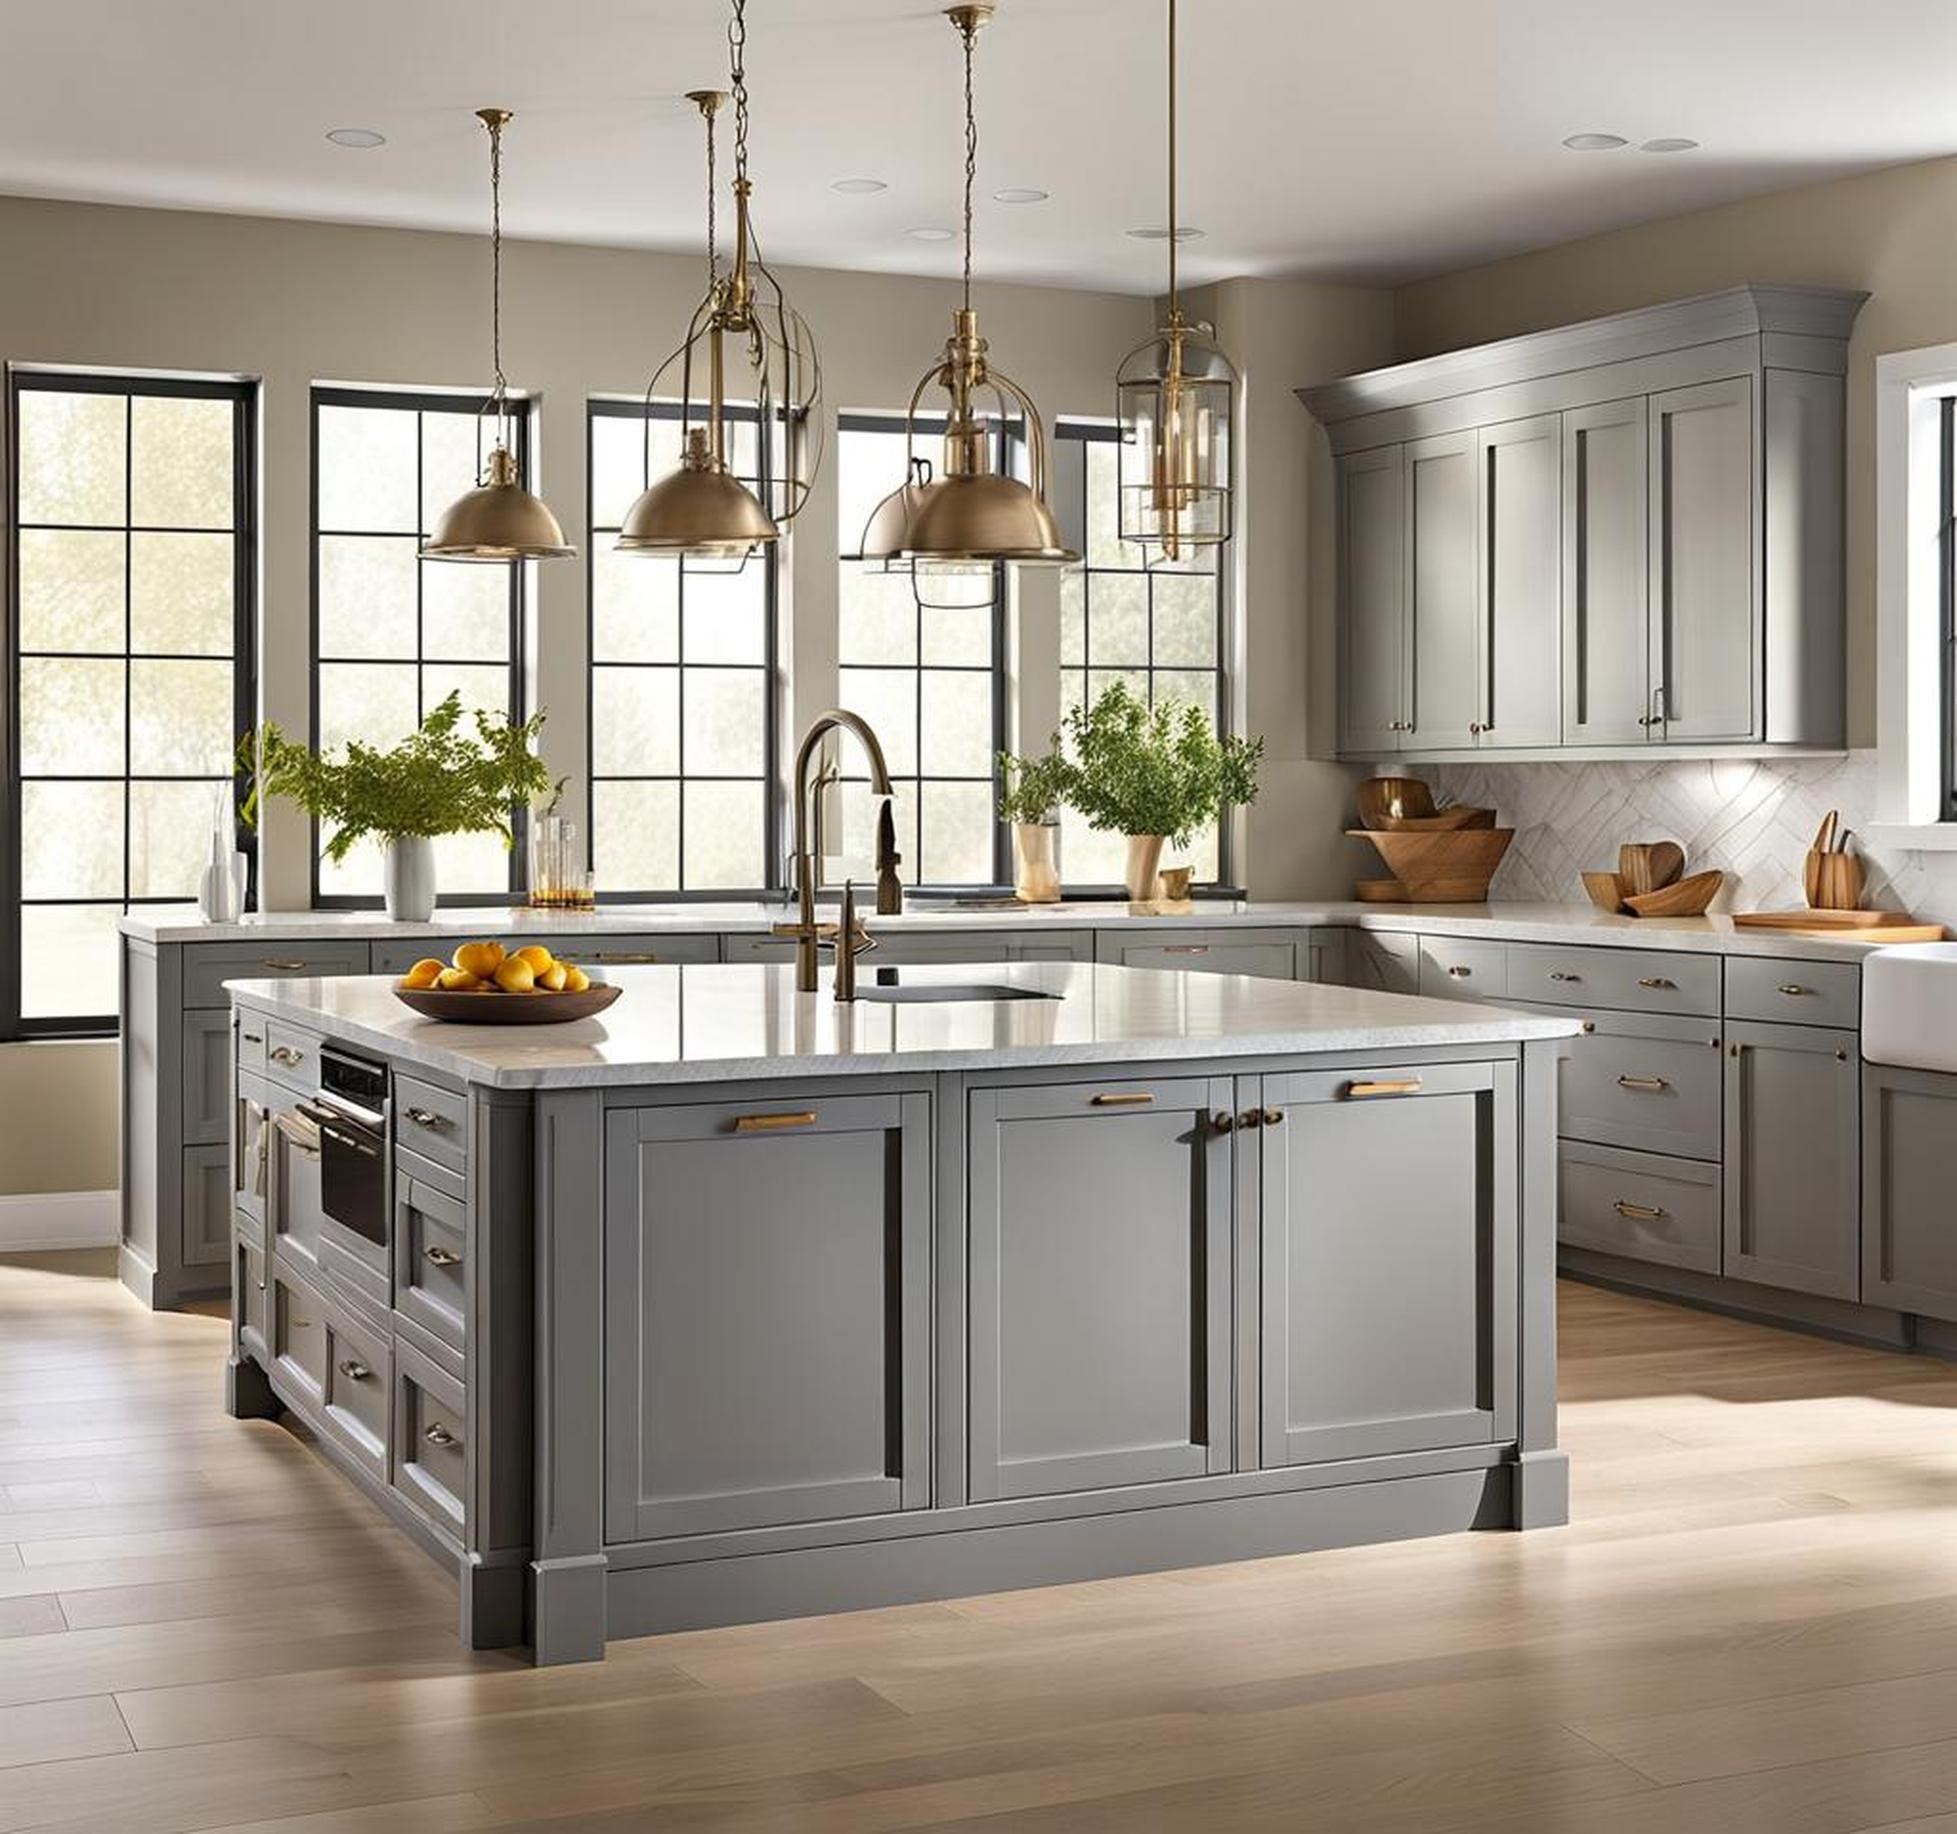 repose gray kitchen cabinets